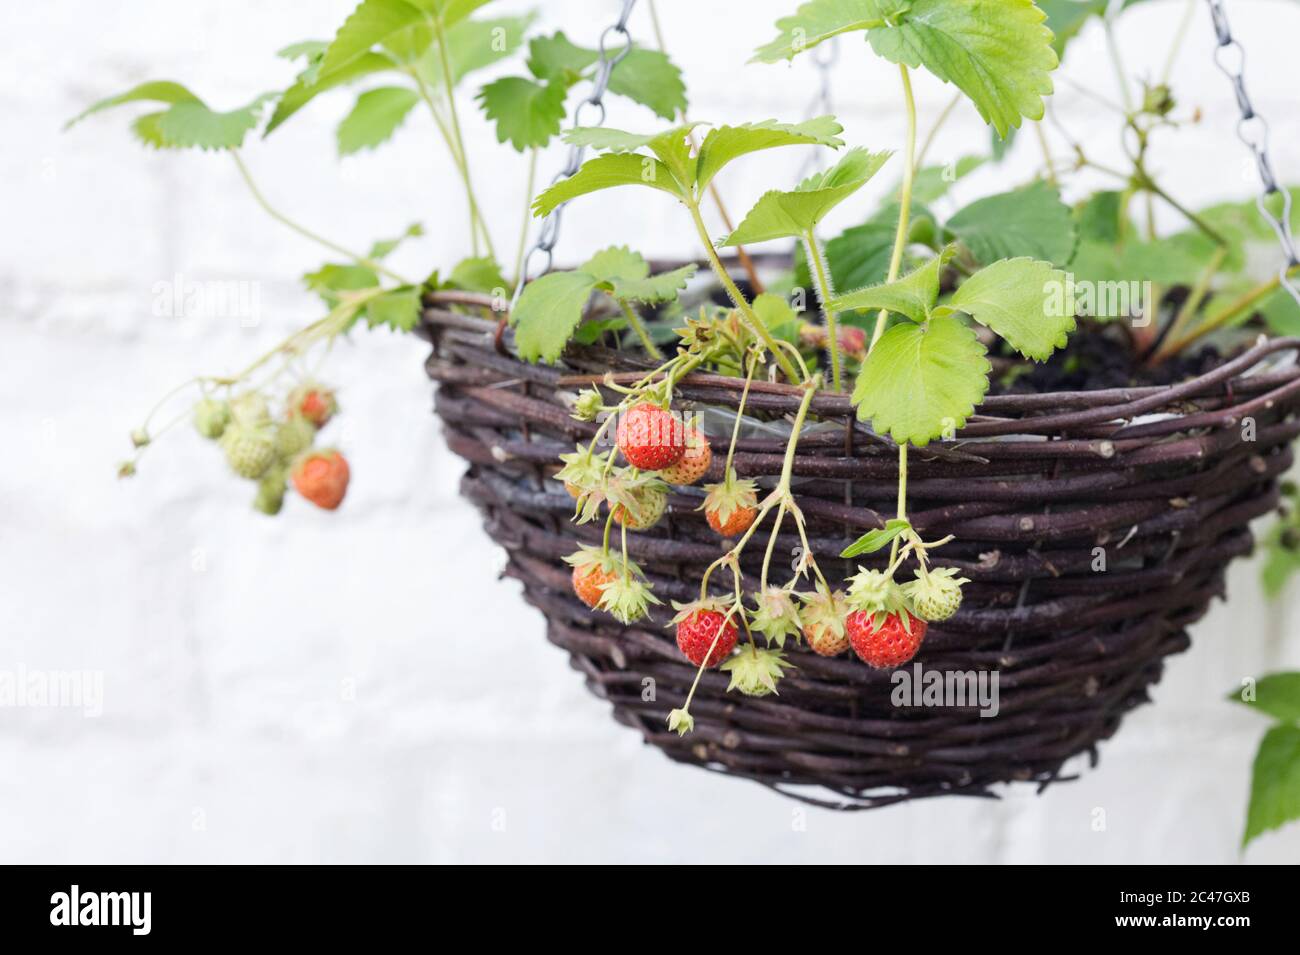 Fragaria × ananassa. Strawberries growing in a hanging basket. Stock Photo